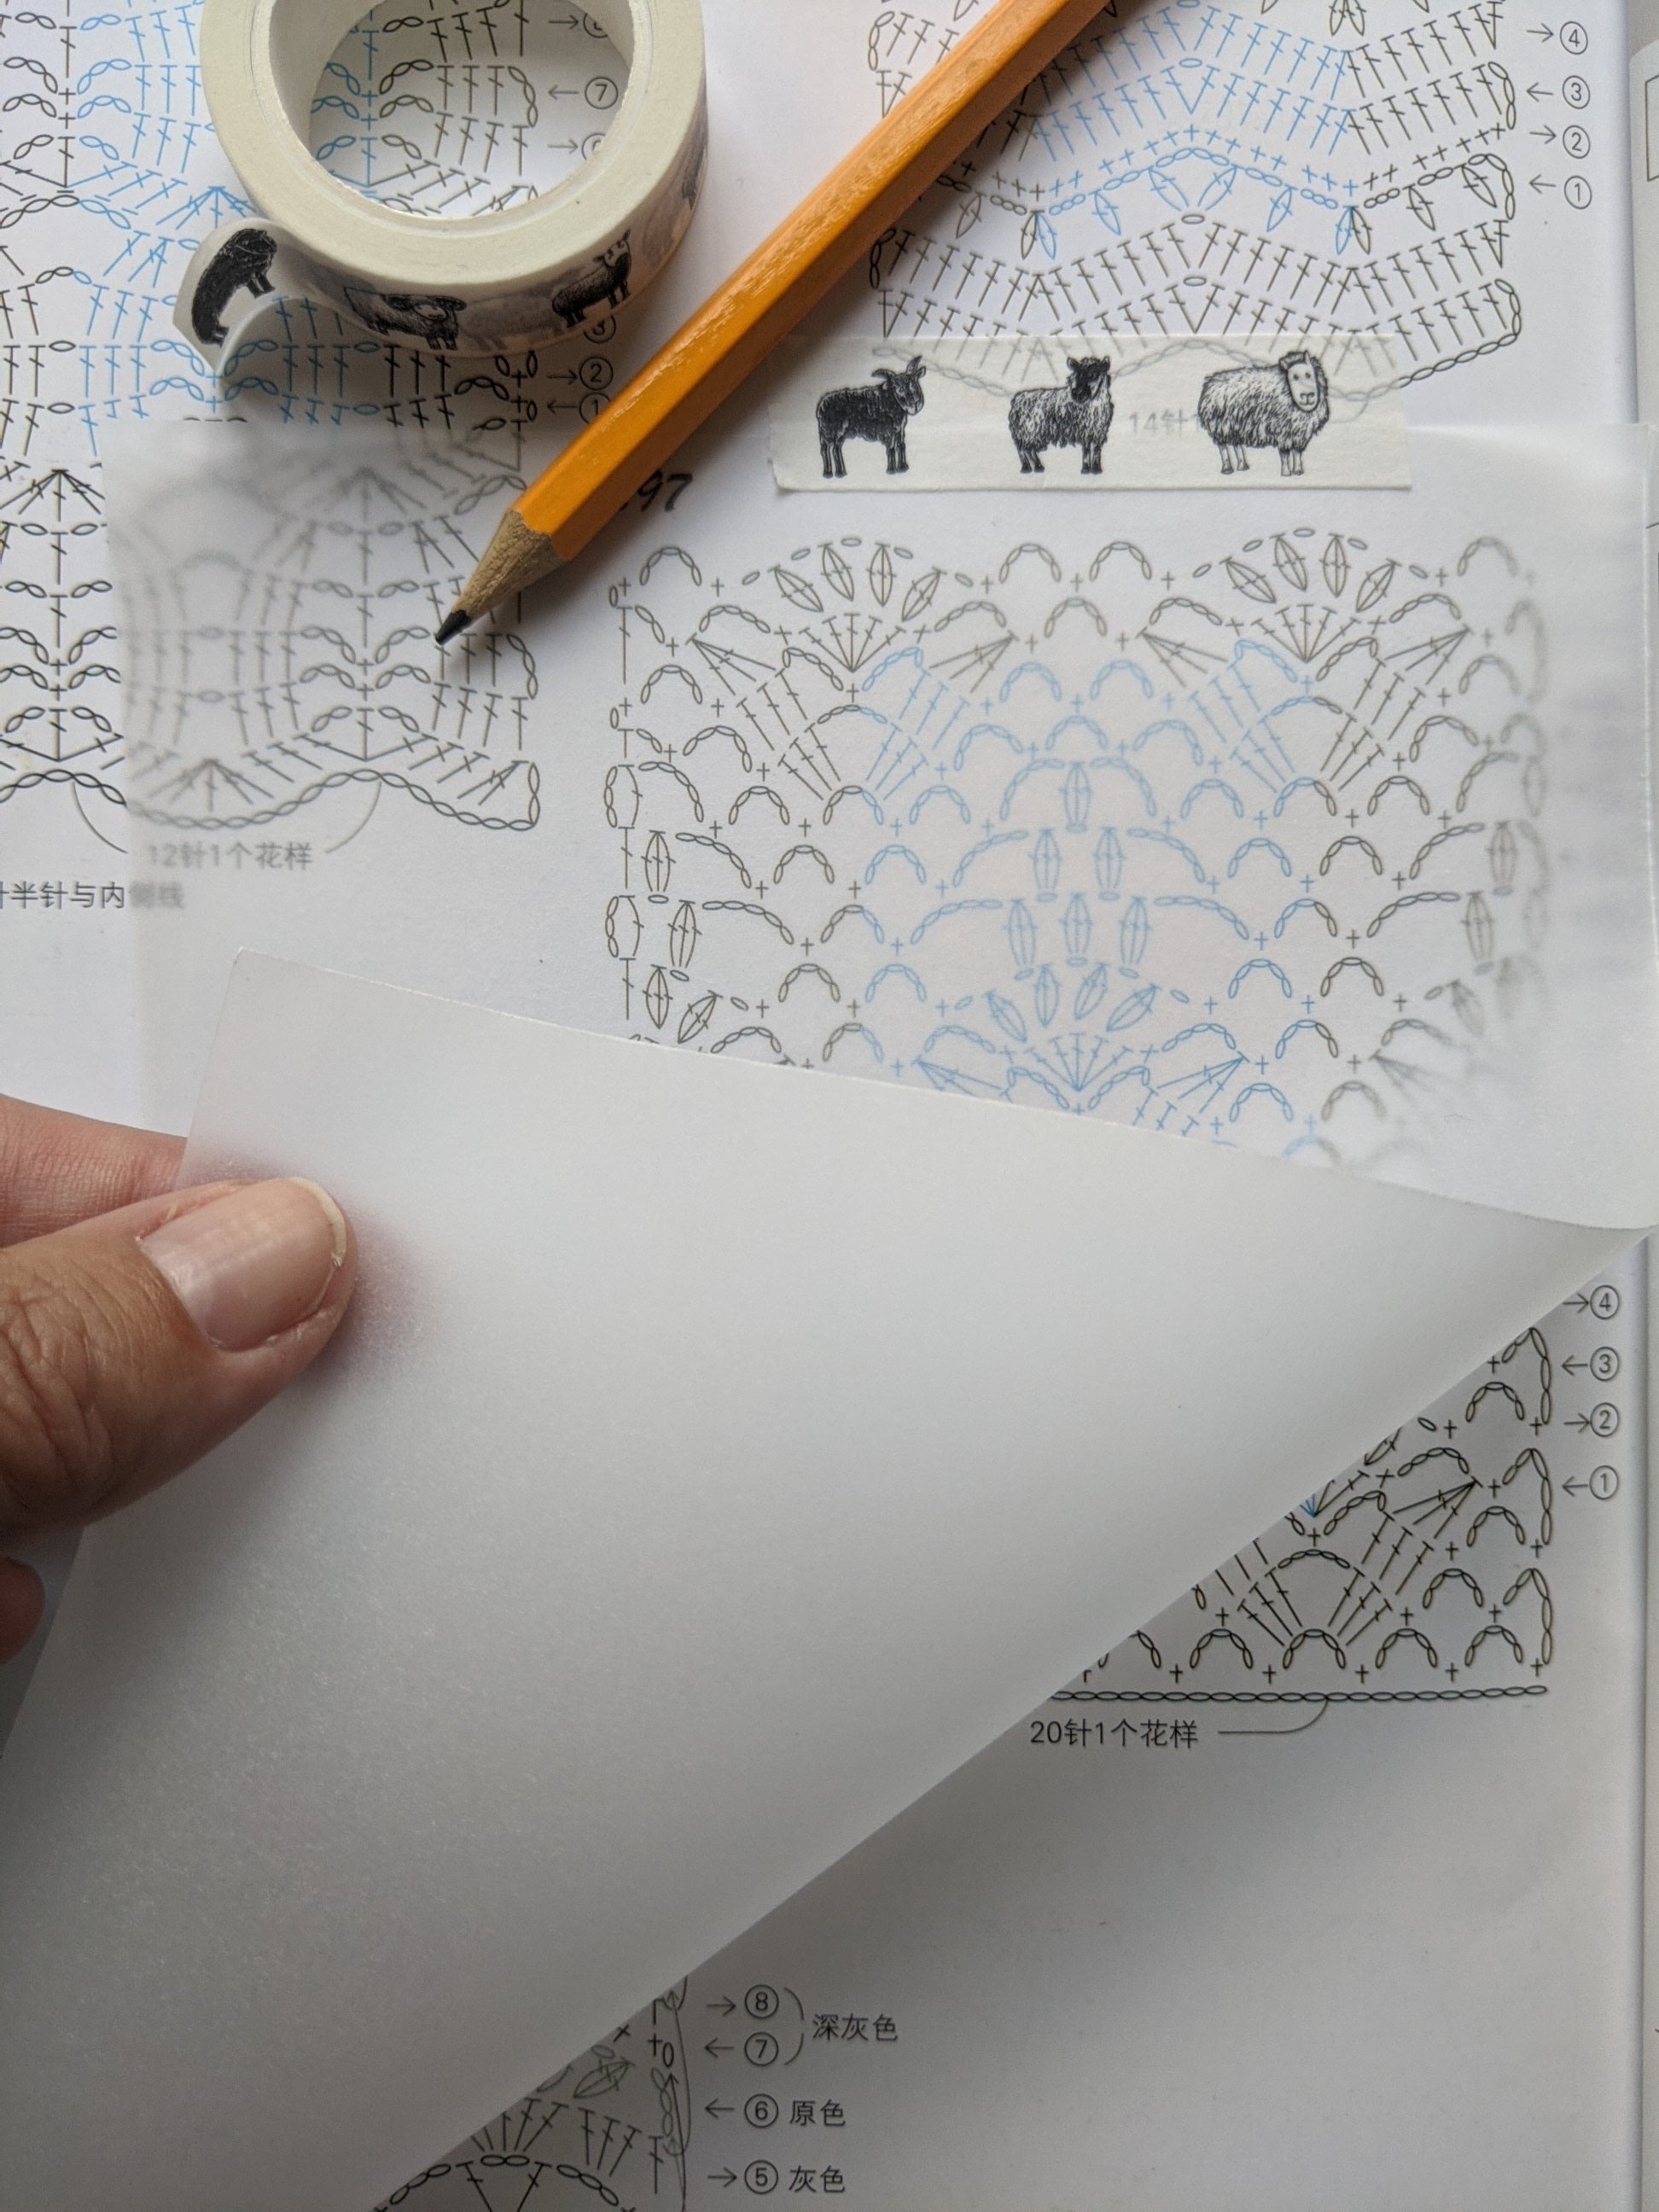 Manipulating crochet stitch patterns using tracing paper